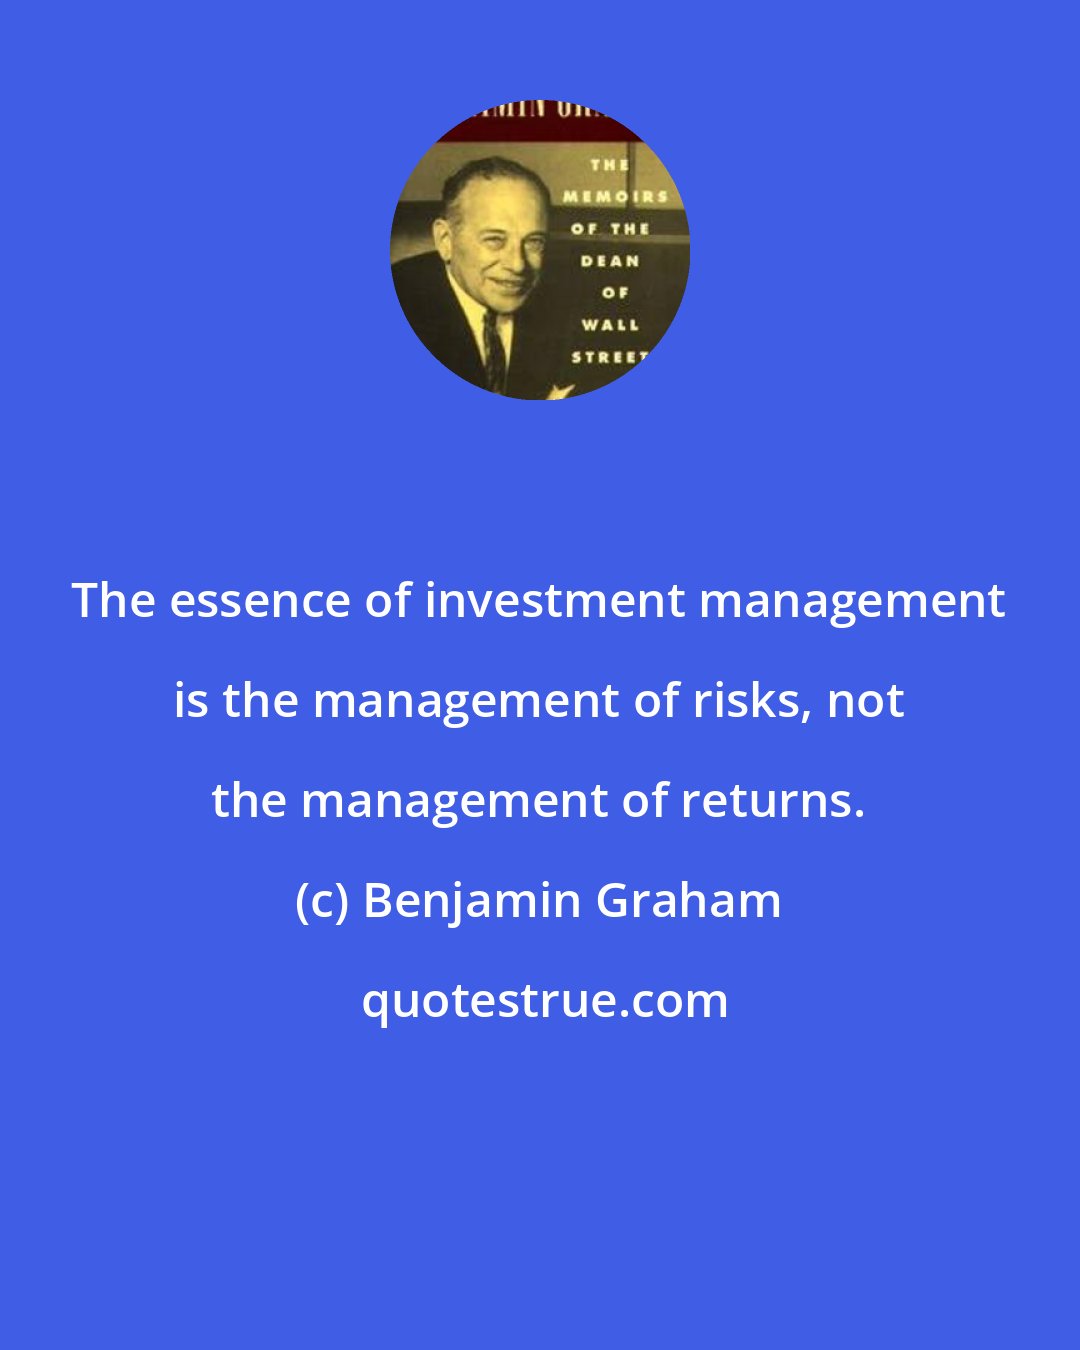 Benjamin Graham: The essence of investment management is the management of risks, not the management of returns.